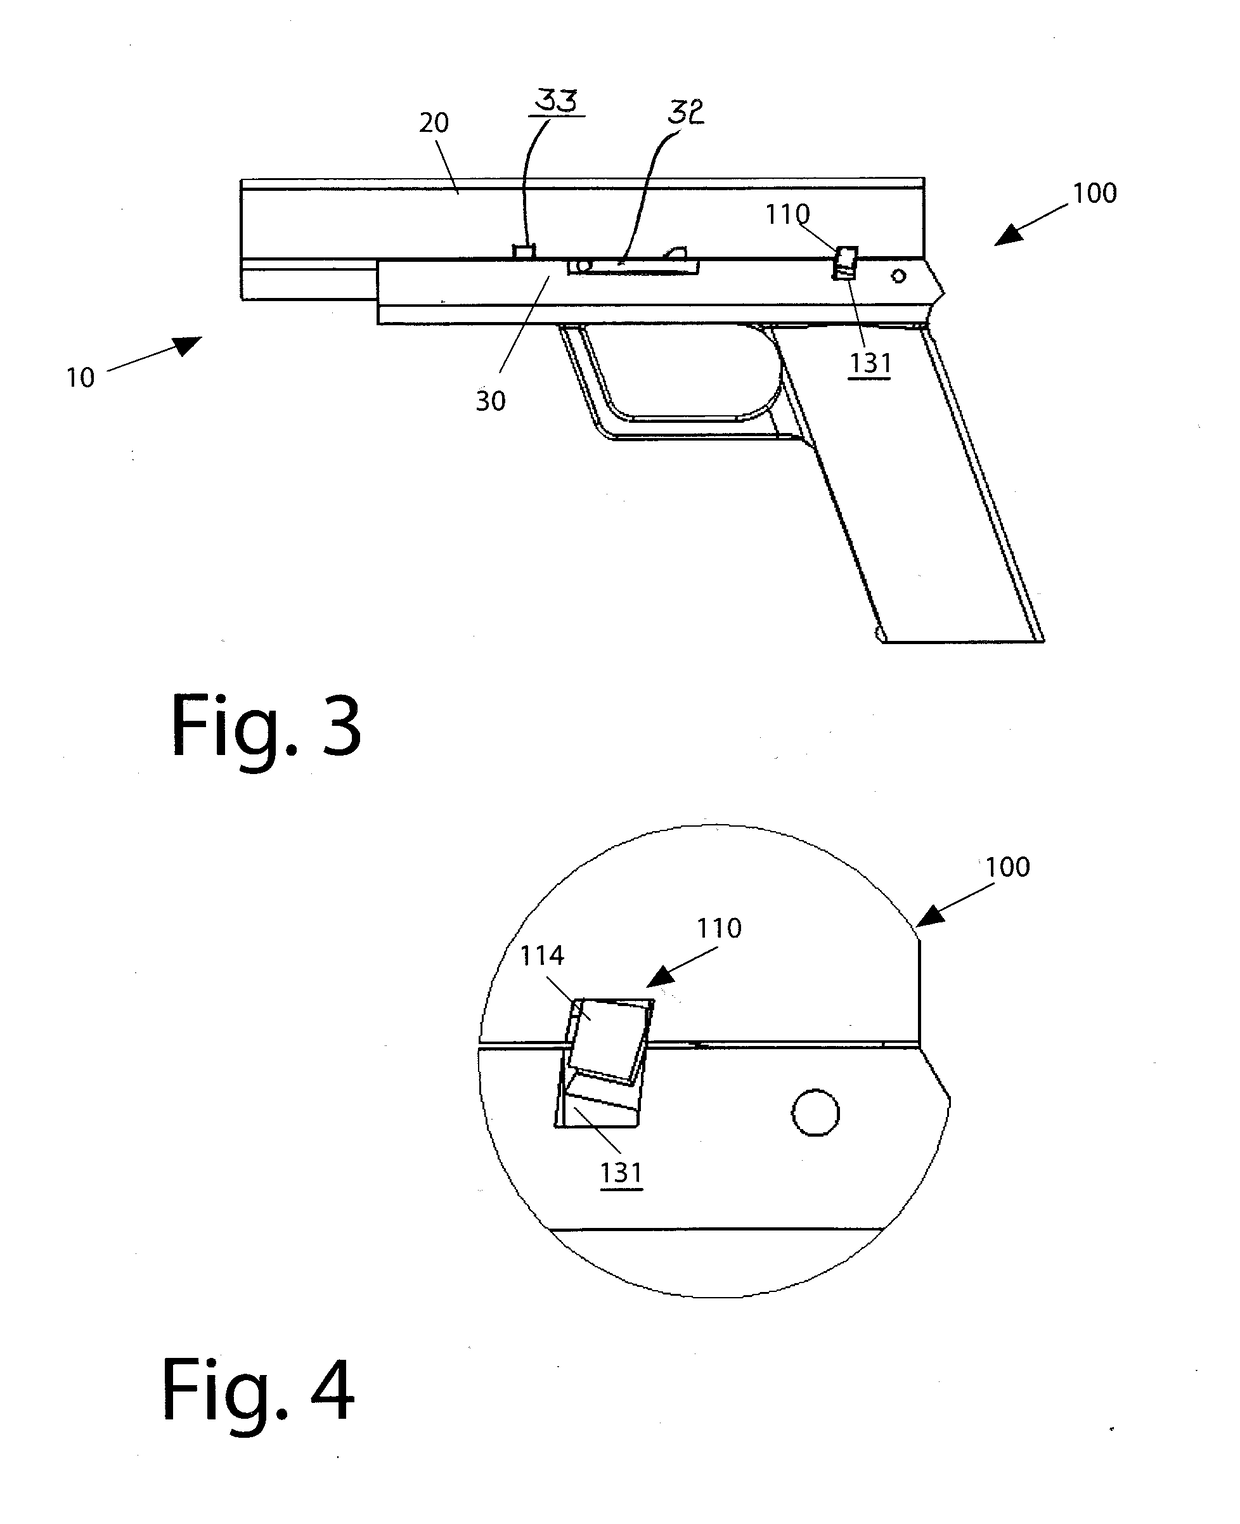 Slide block mechanism for semi-automatic pistols